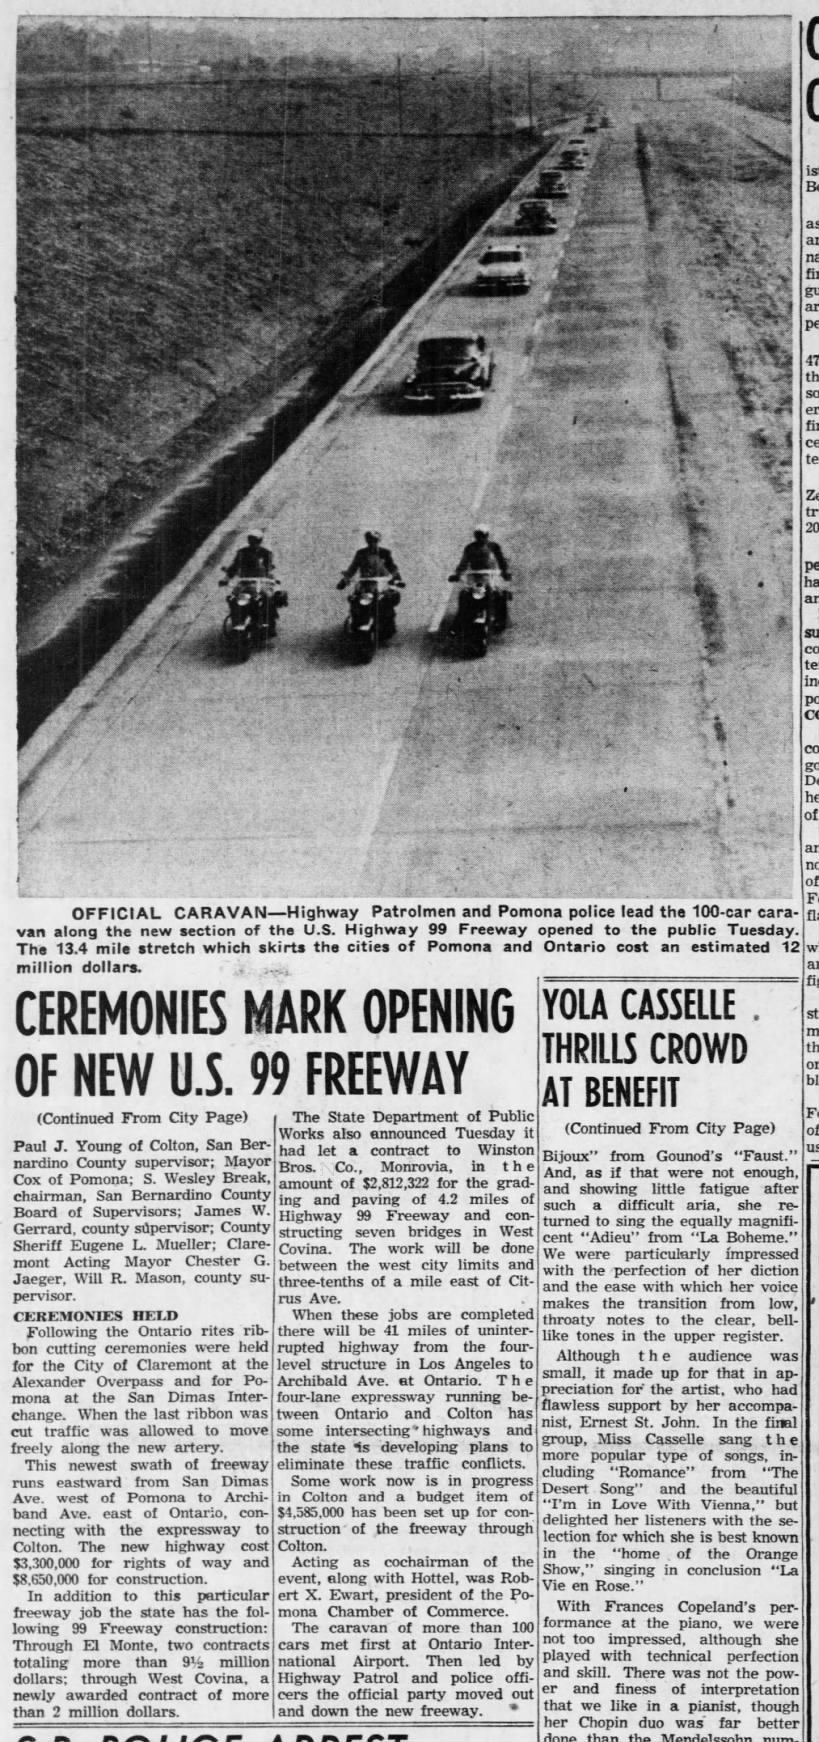 Ceremonies Mark Opening of New U.S. 99 Freeway